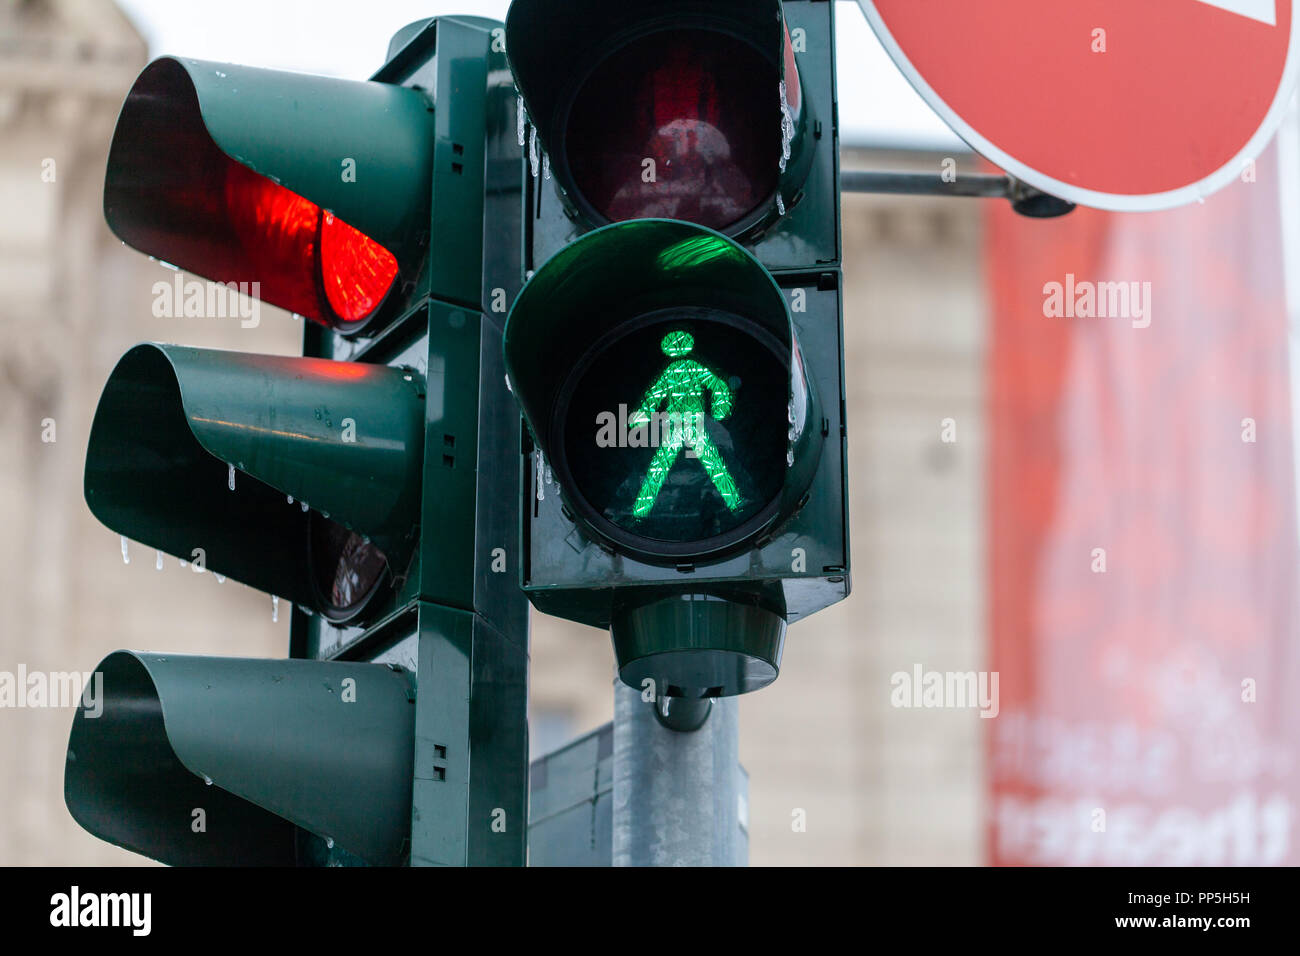 german traffic sign on street in Nuremberg, Germany Stock Photo